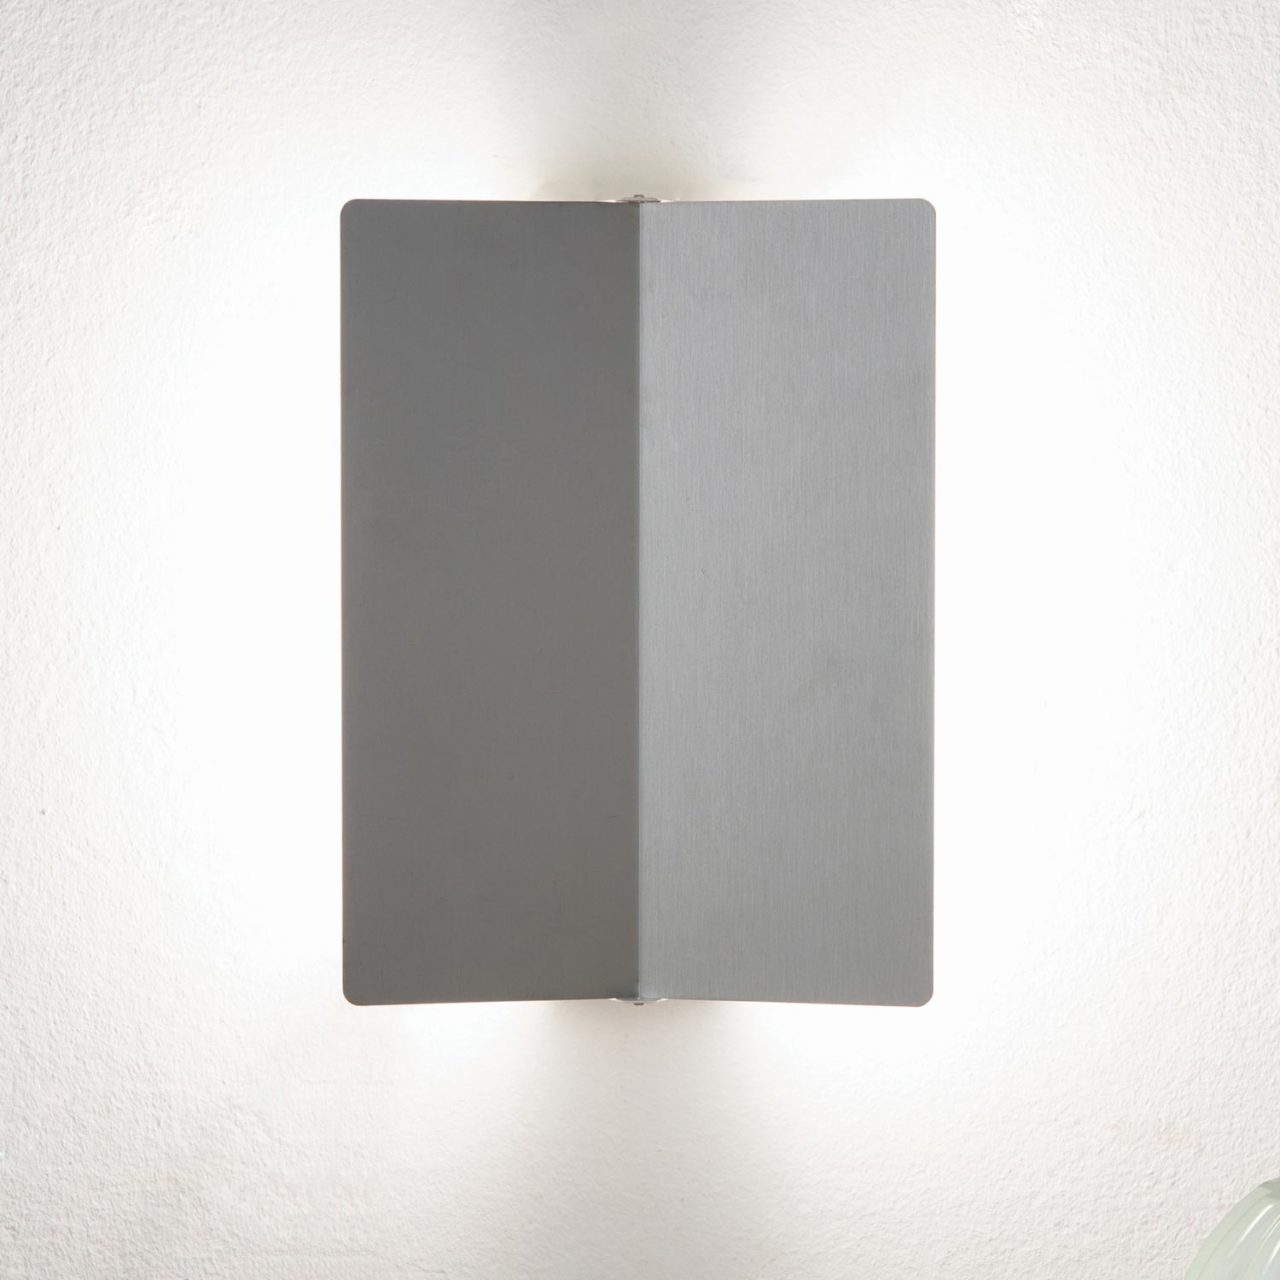 Anodized natural aluminium adjustable  pivotable wall light by Nemo